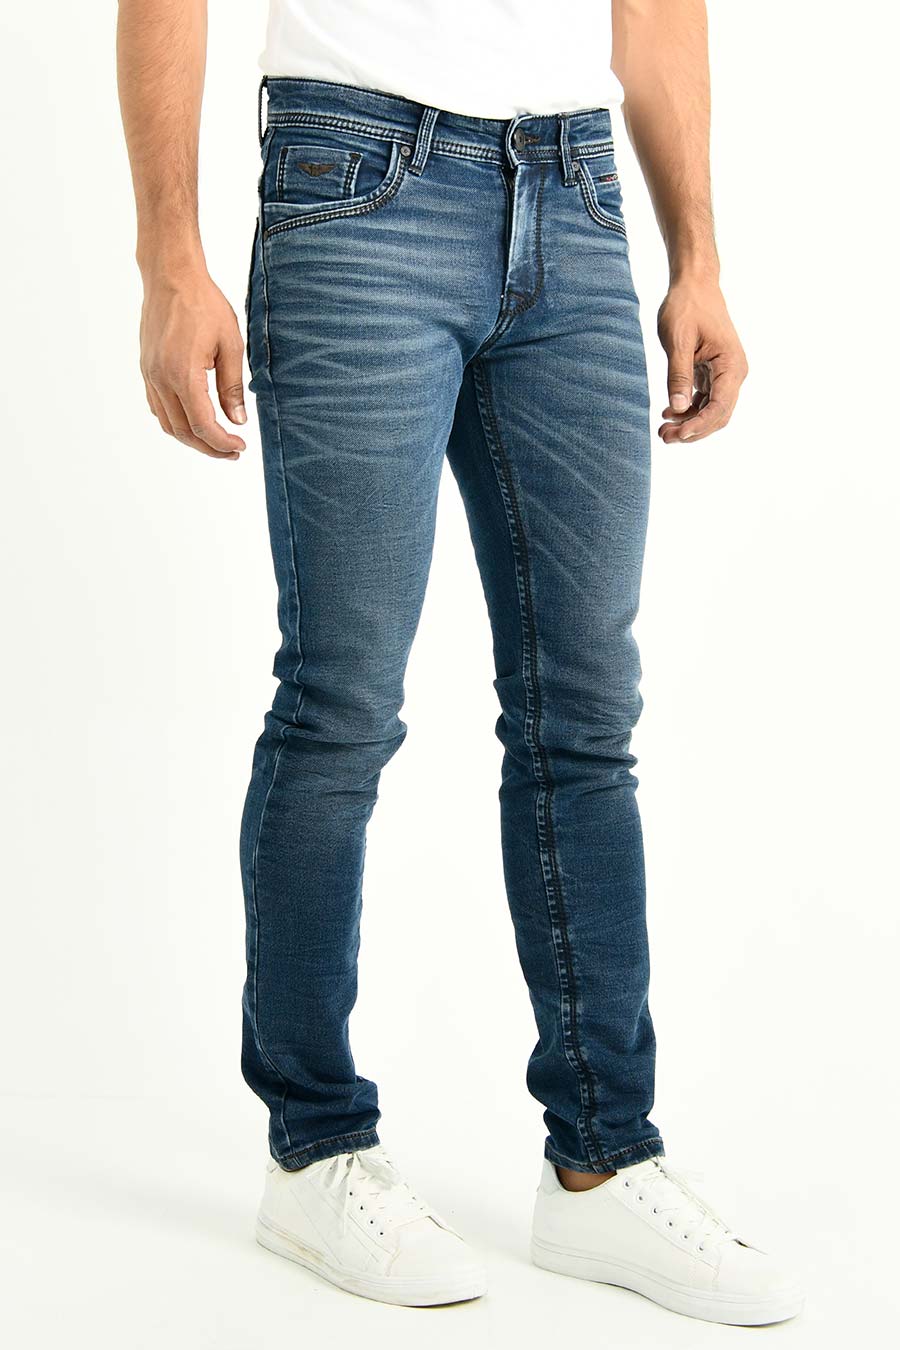 Men’s Denim Jeans-RJ4022